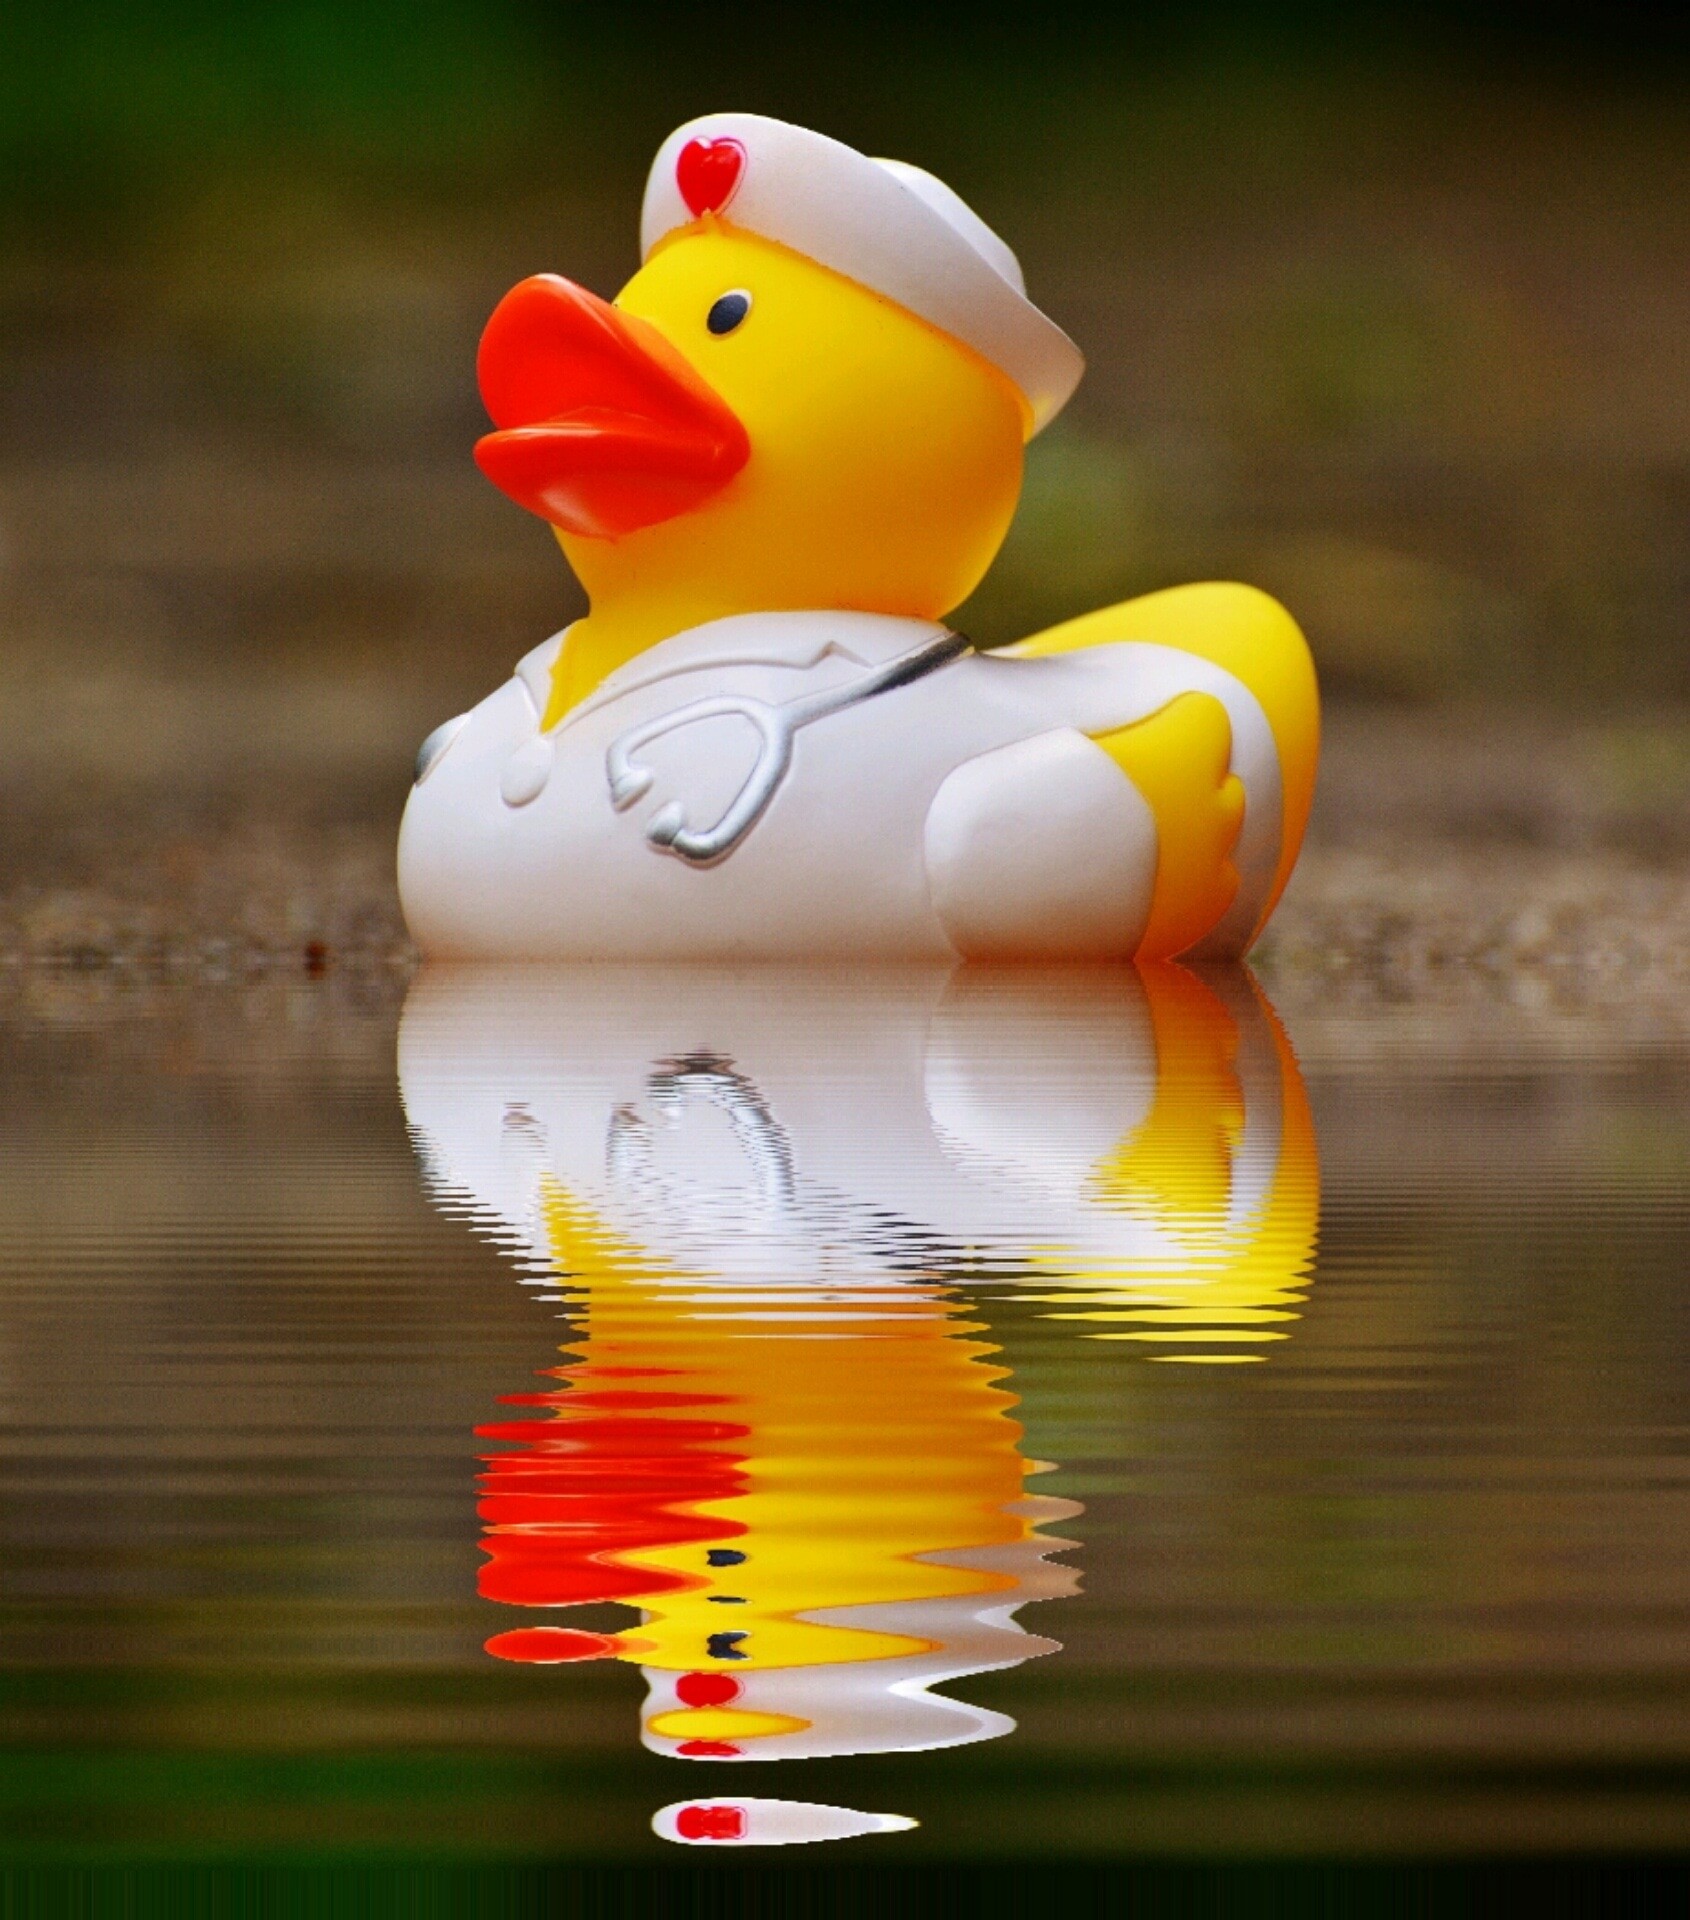 Rubber Duck, Bath Duck, Mirroring, Water, animal representation, reflection